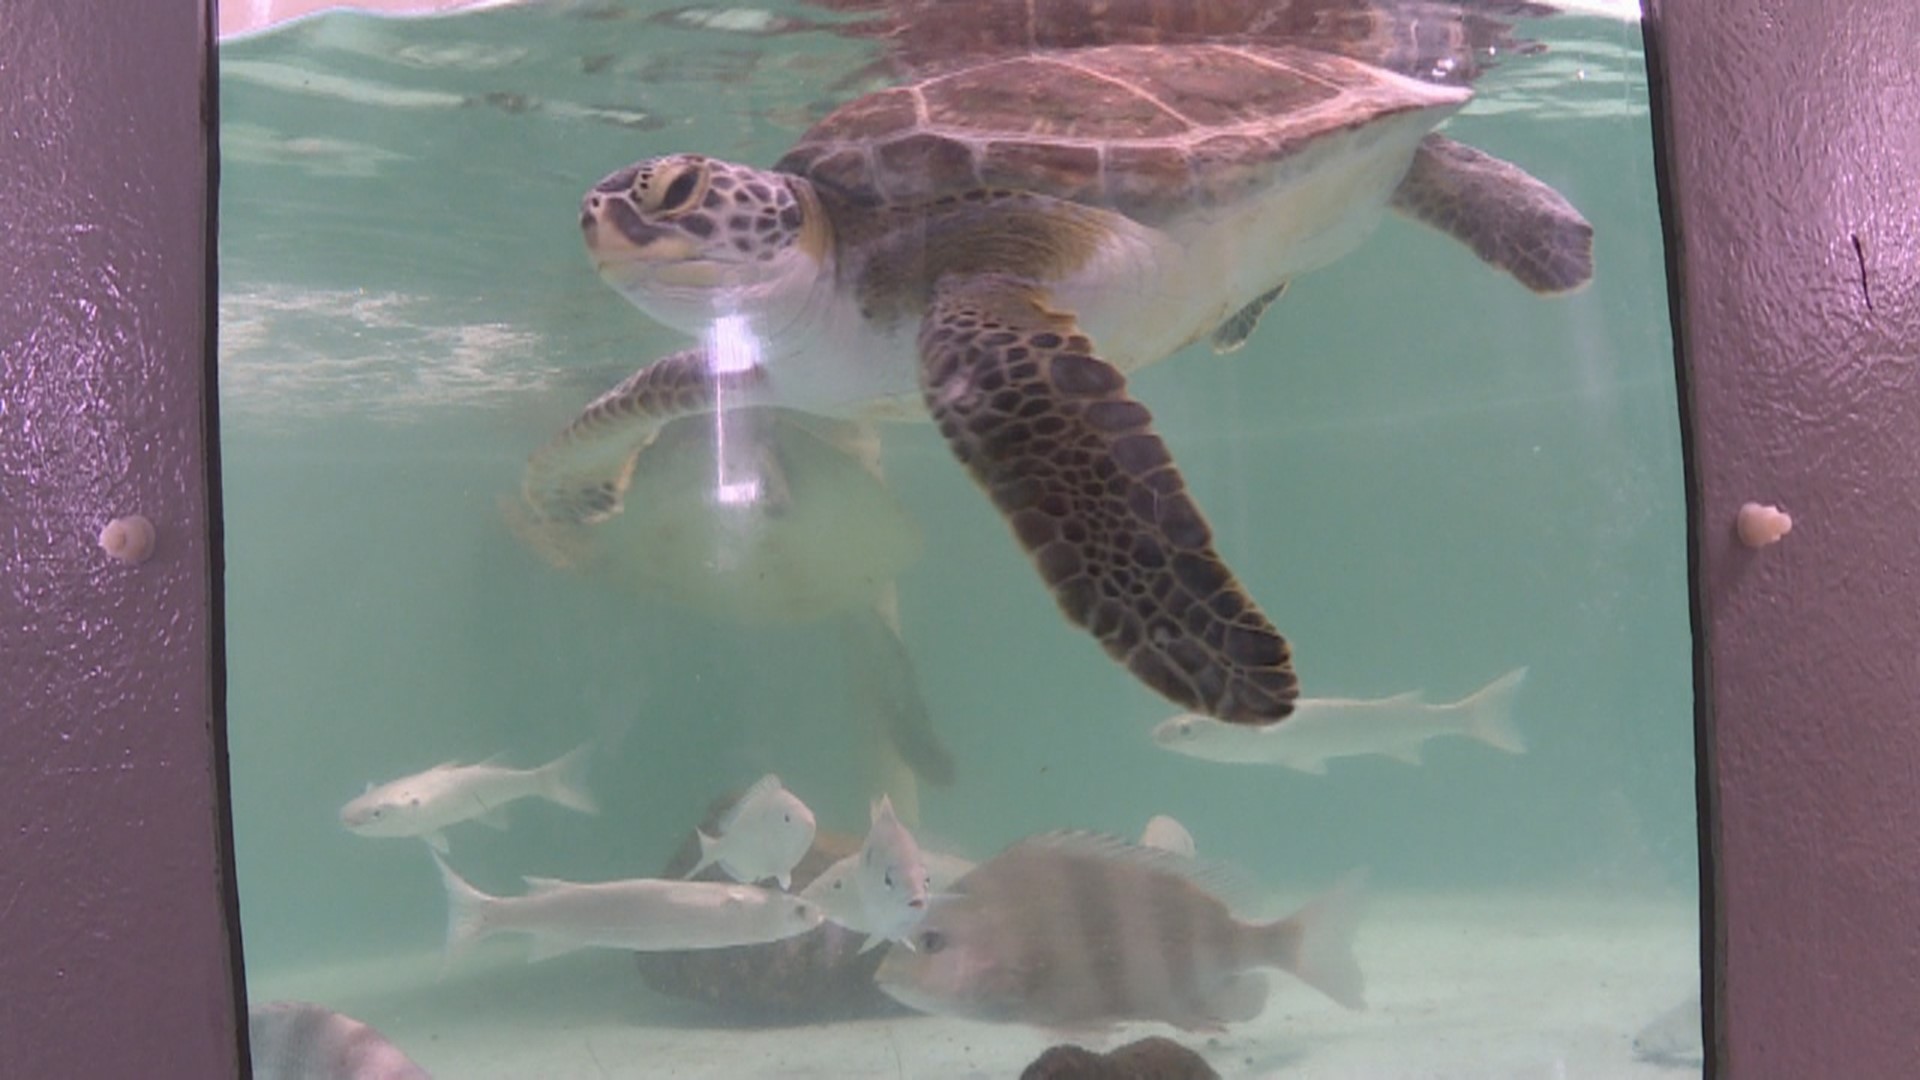 New turtle attraction at SeaWorld benefits ARK in Port Aransas